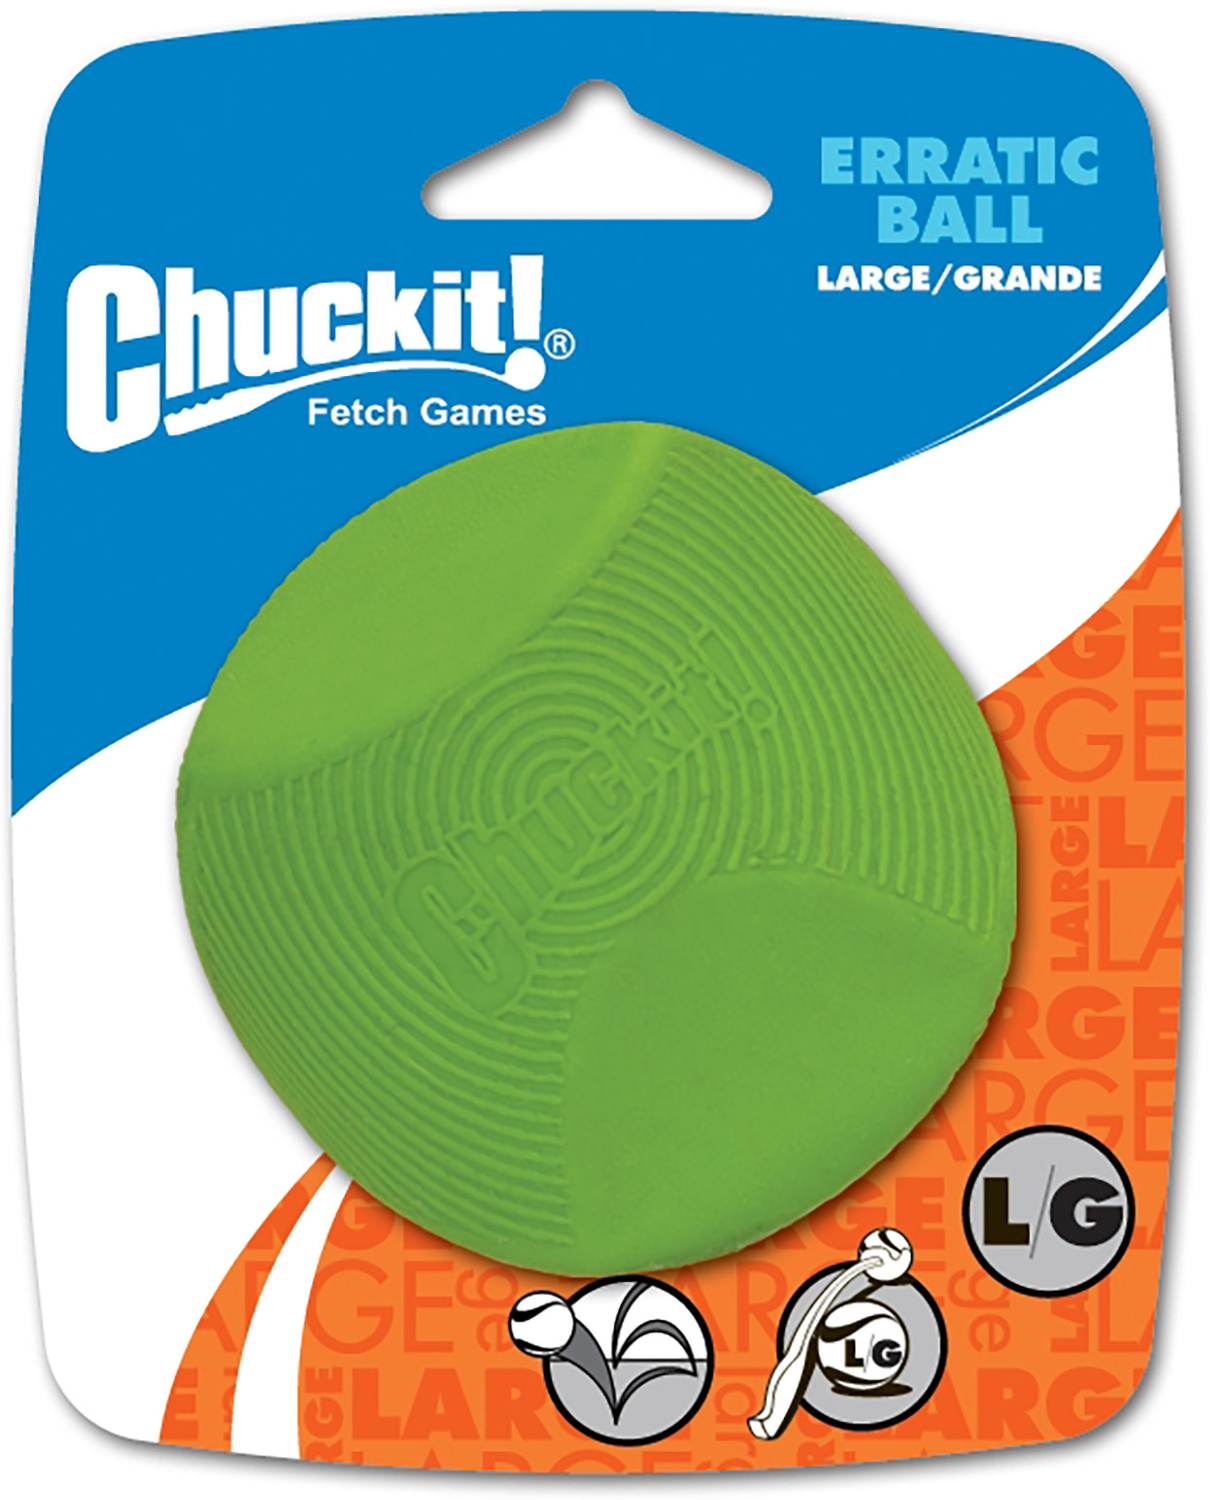 Chuckit! Erratic Ball